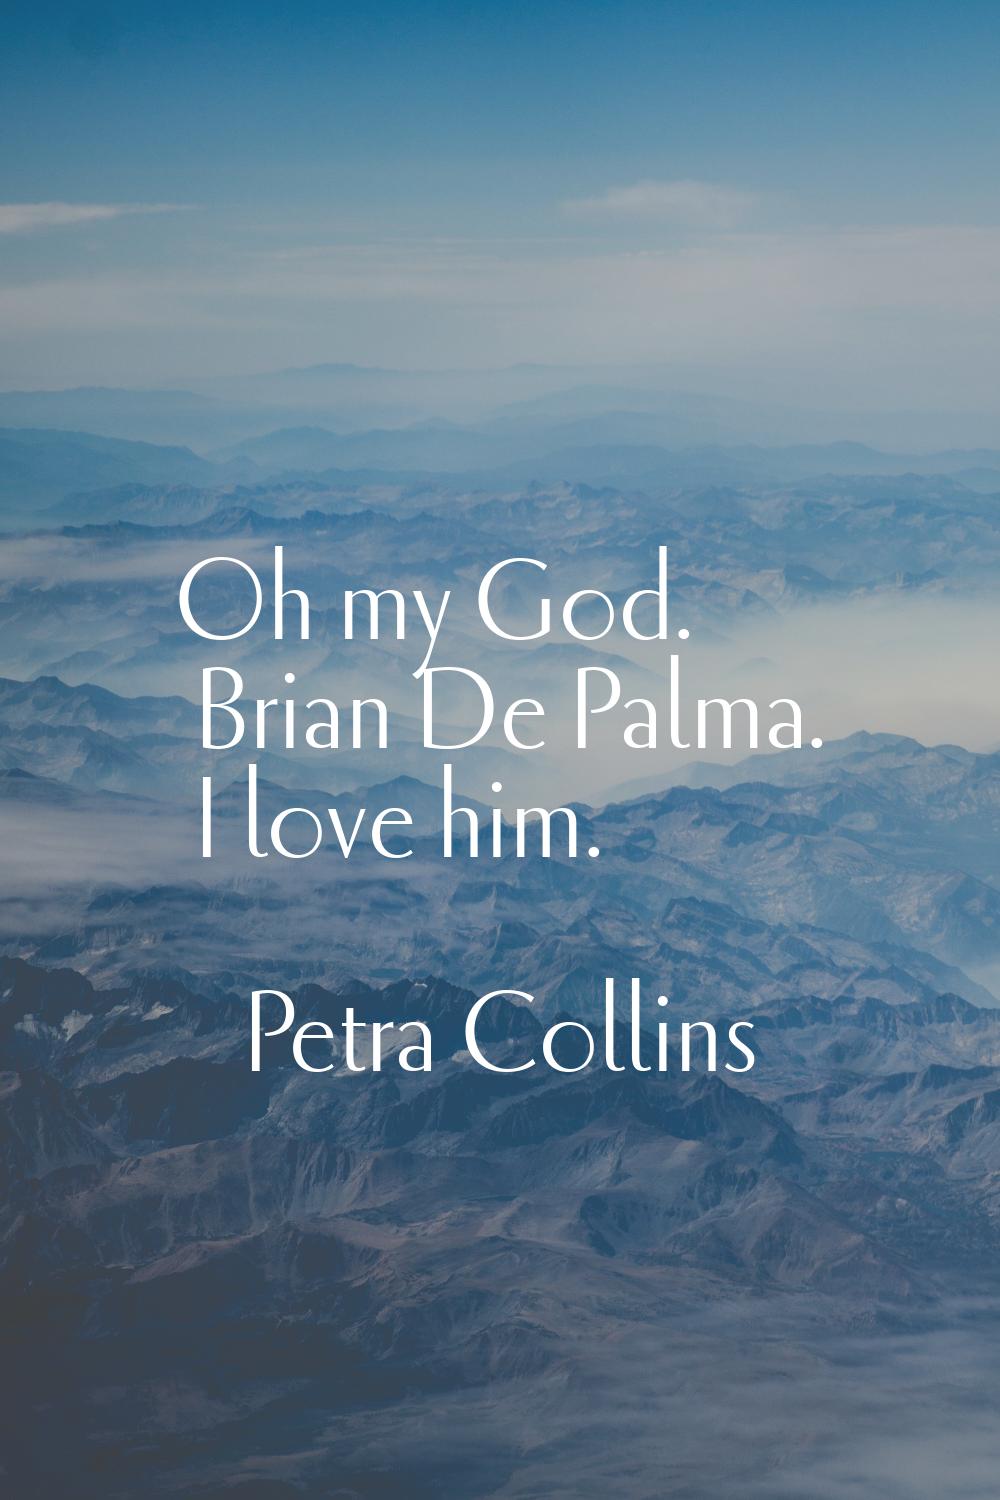 Oh my God. Brian De Palma. I love him.